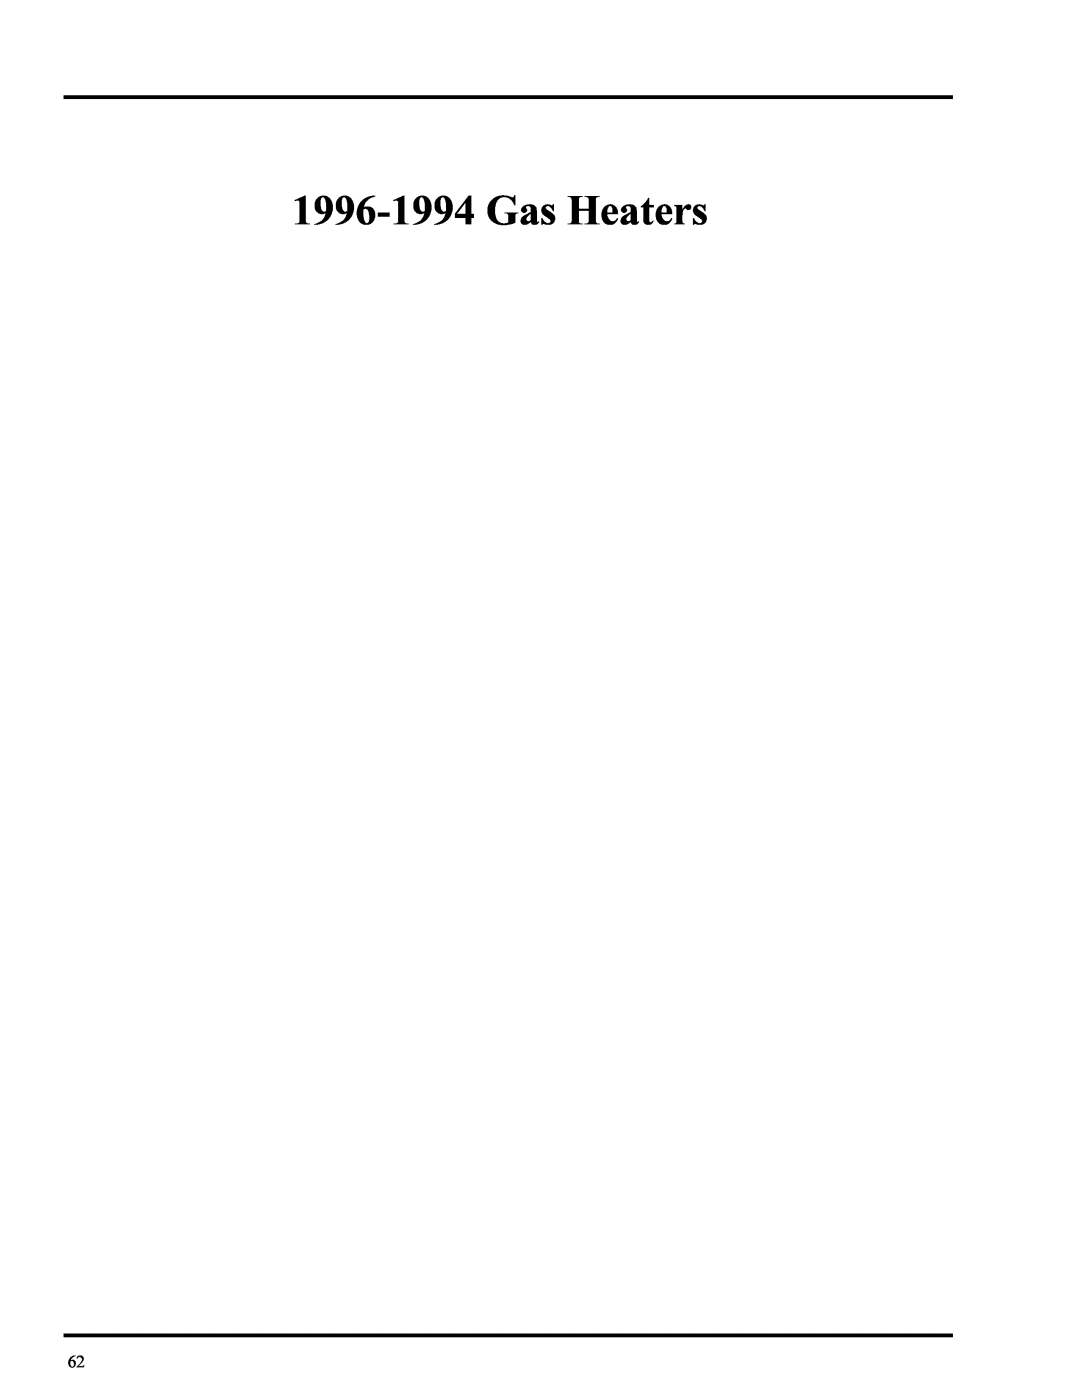 GSI Outdoors PNEG-377 service manual 1996-1994Gas Heaters 